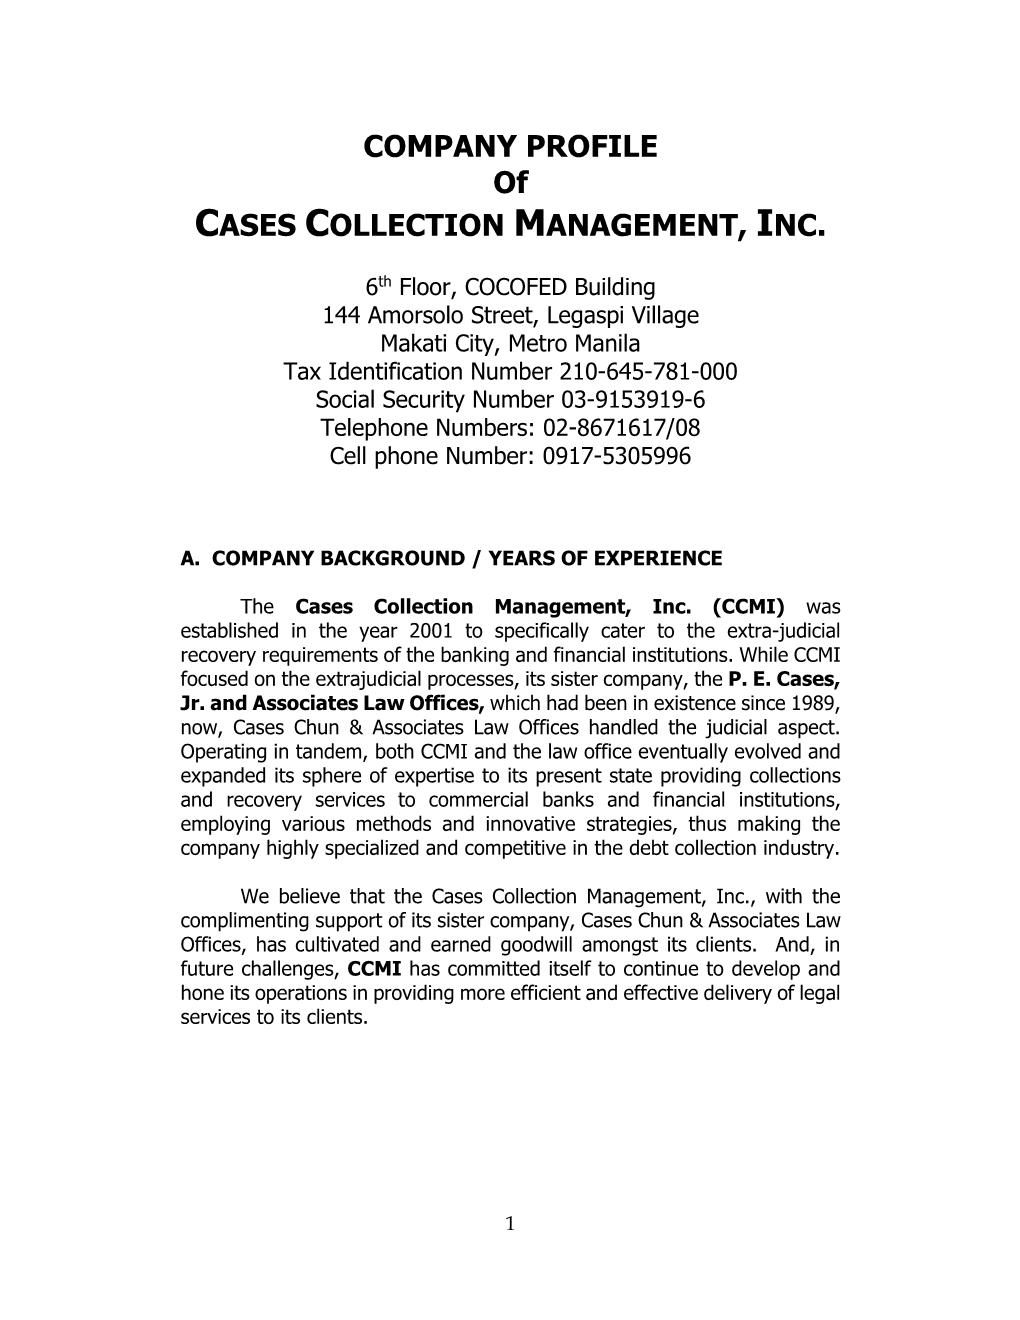 Cases Collection Management, Inc